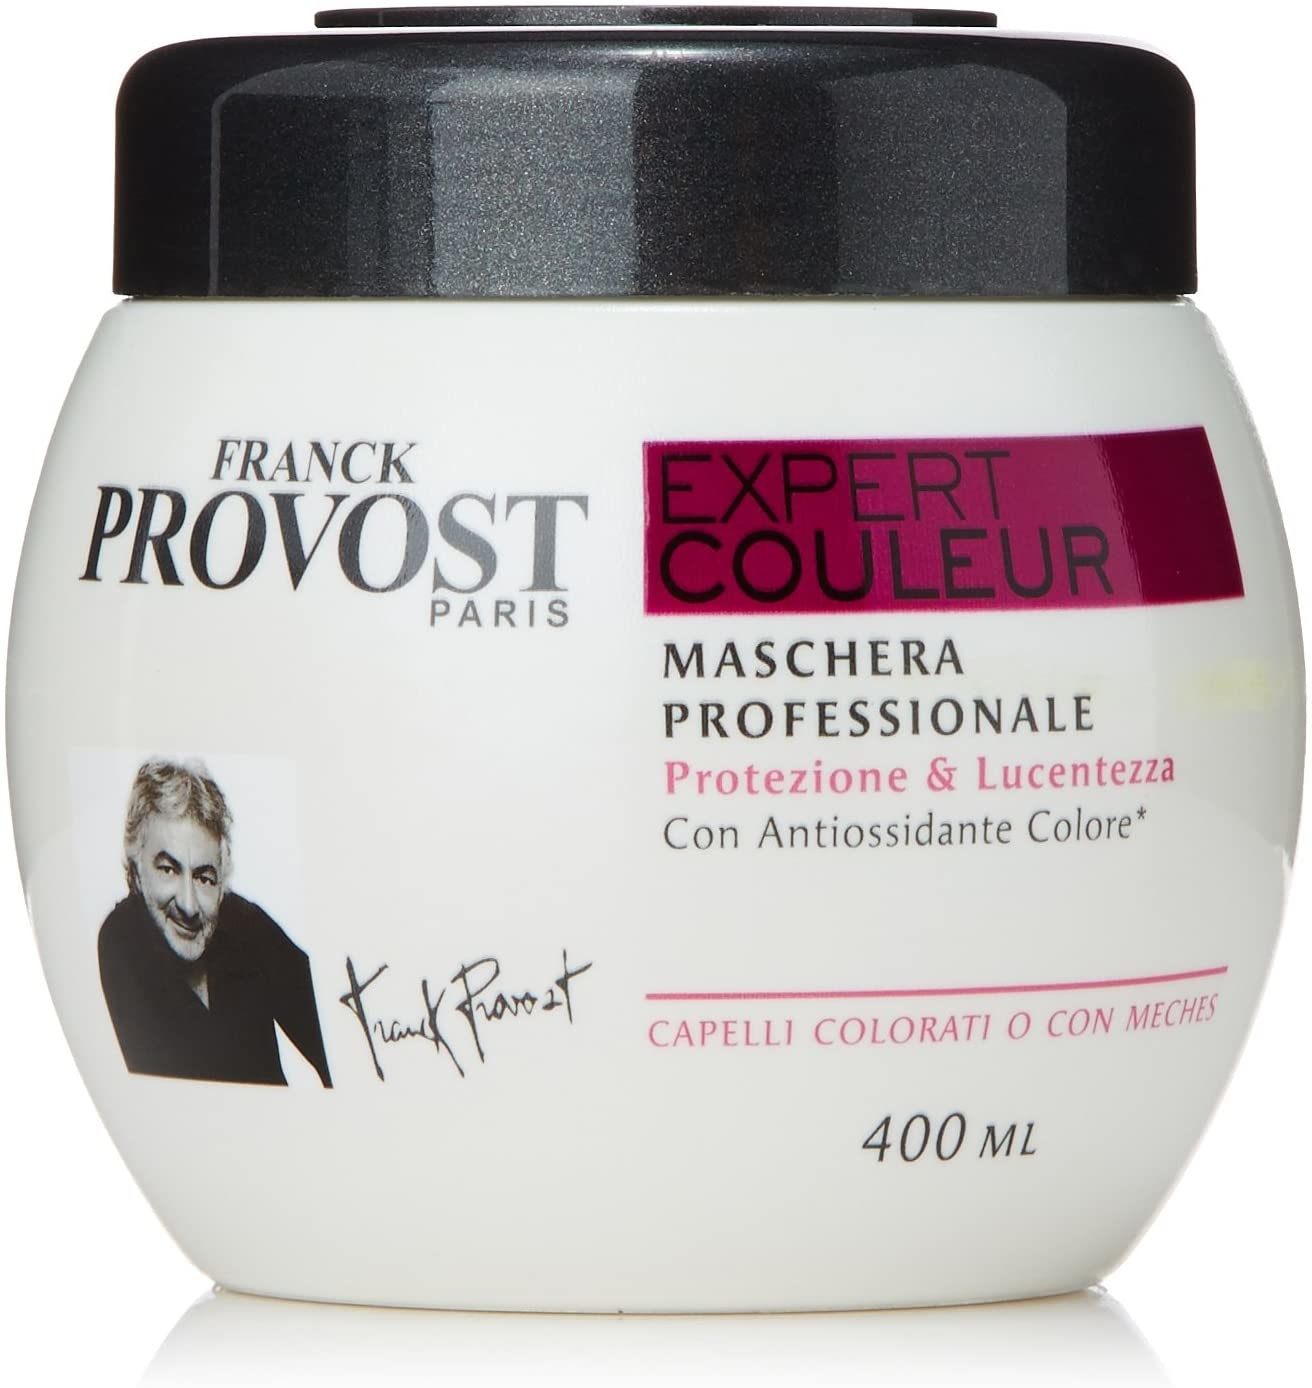 Franck Provost - Expert Couleur Professional Hair Mask - 400ml